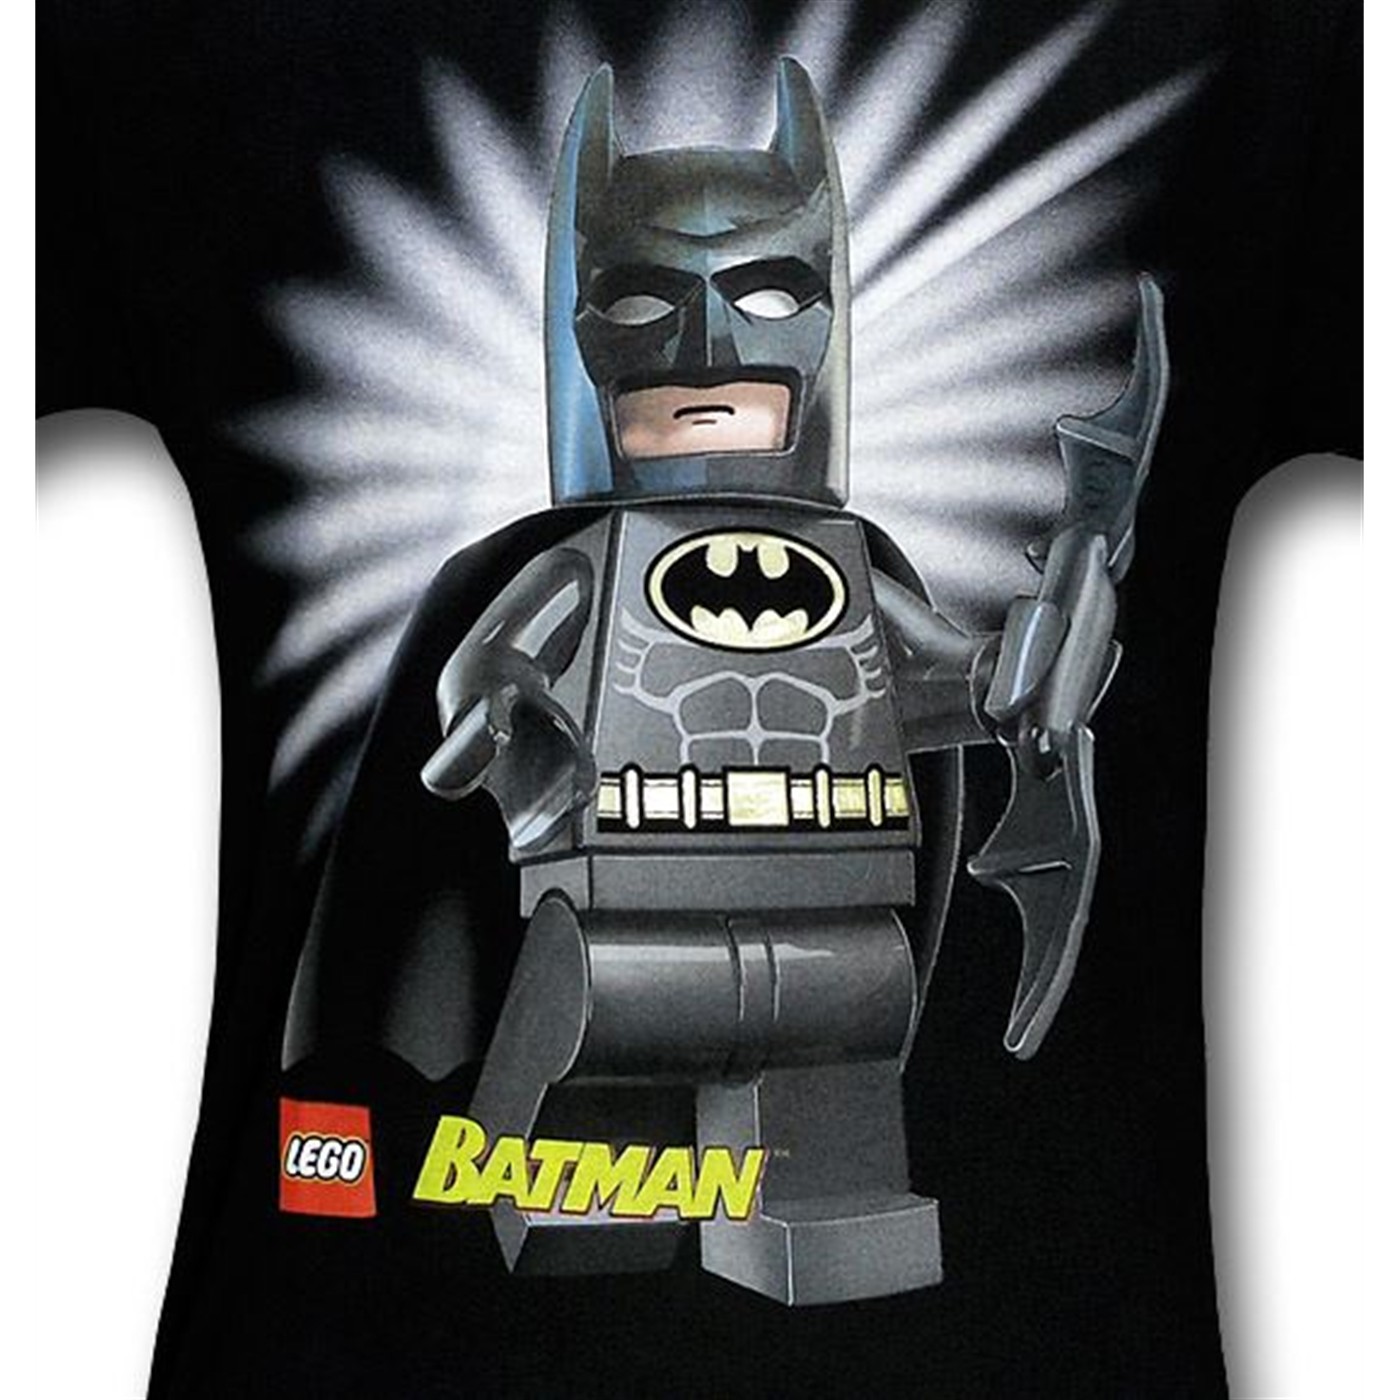 Batman Lego Solitary Sentry Kids T-Shirt